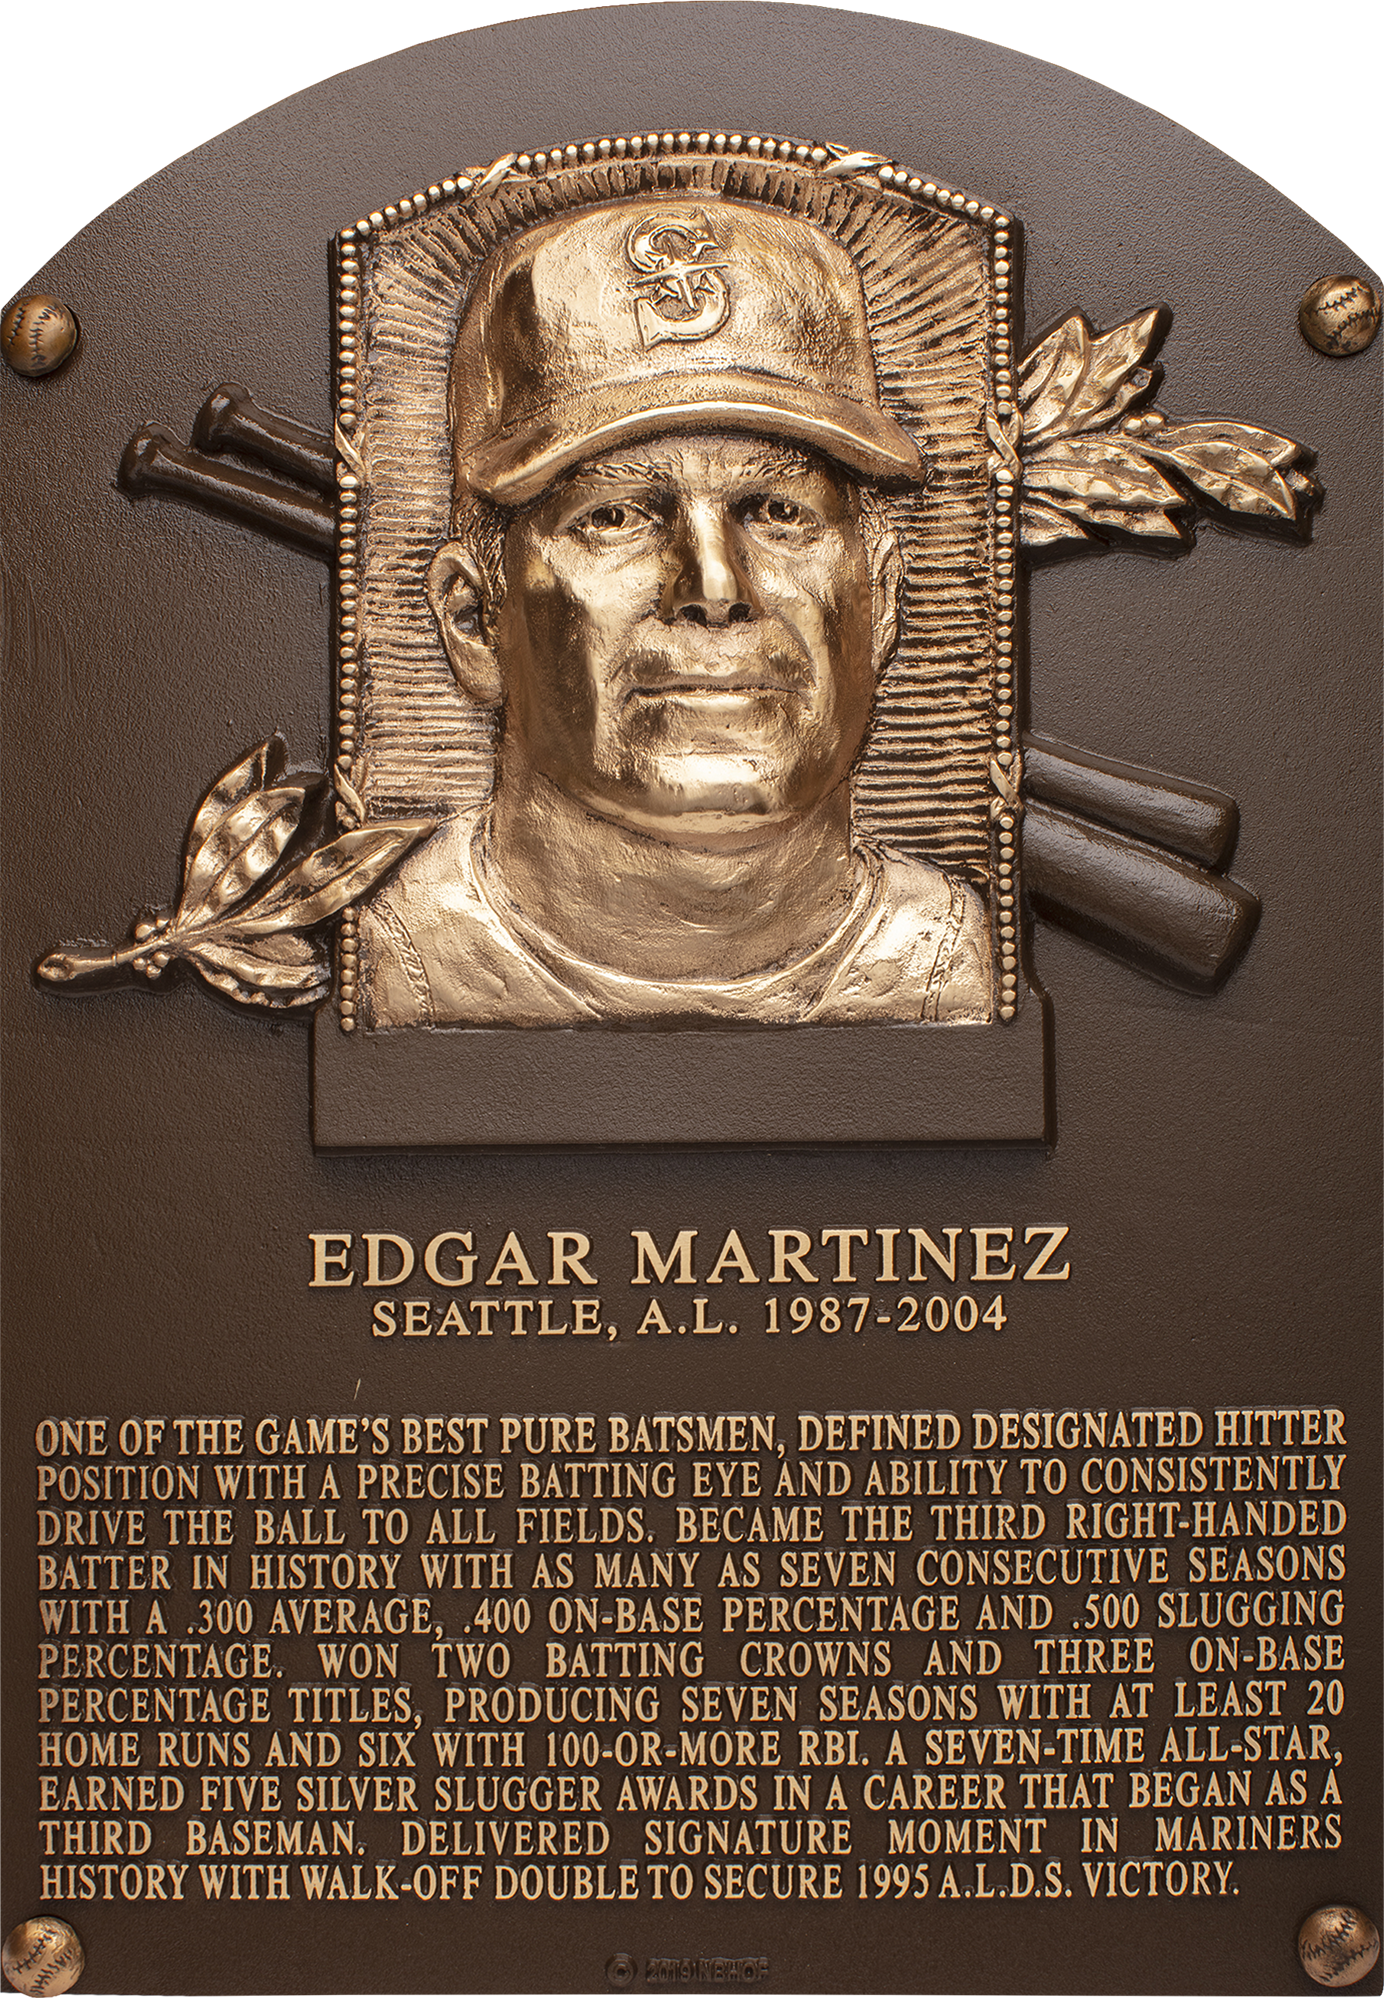 Edgar Martinez Hall of Fame plaque